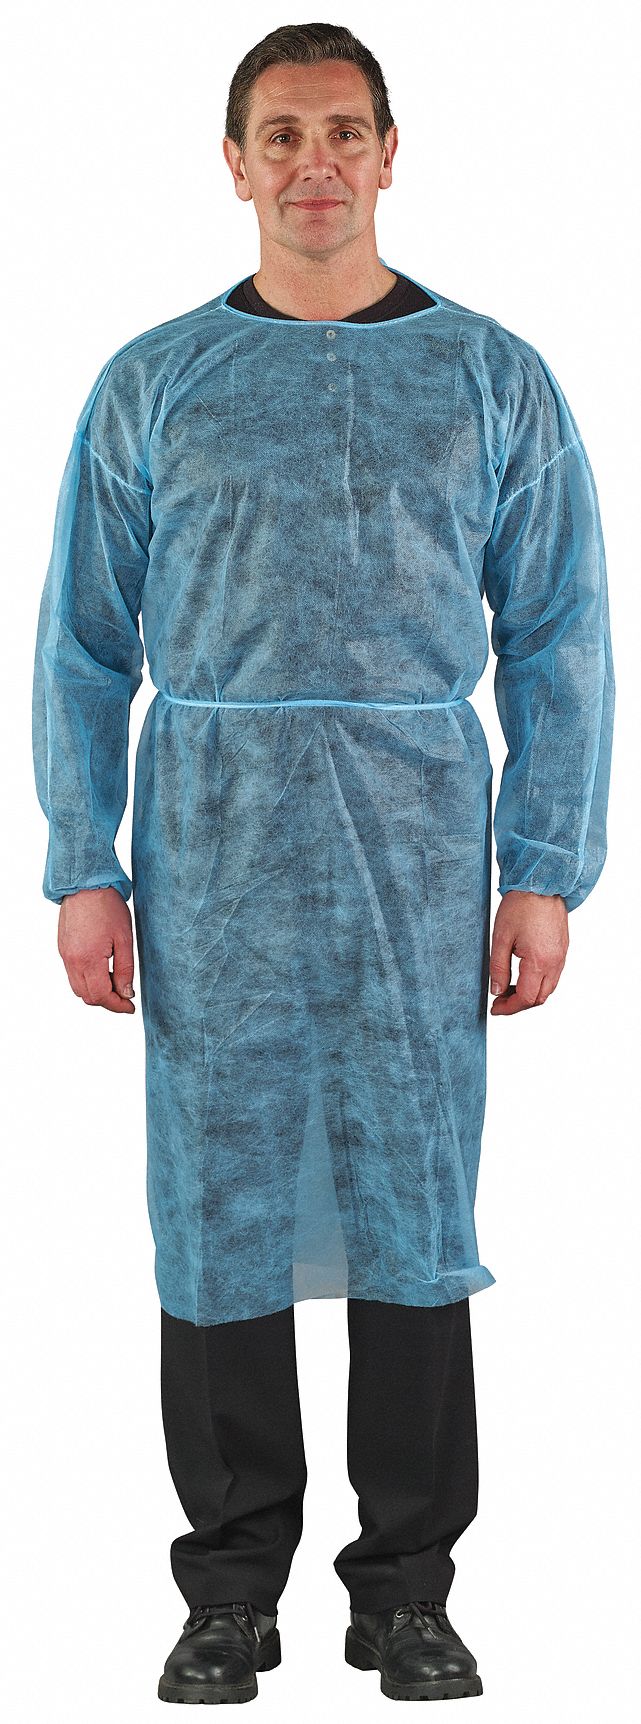 Isolation Gowns: Elastic, Open-Back Back, Spunbond Polypropylene, Blue, XL, 50 PK